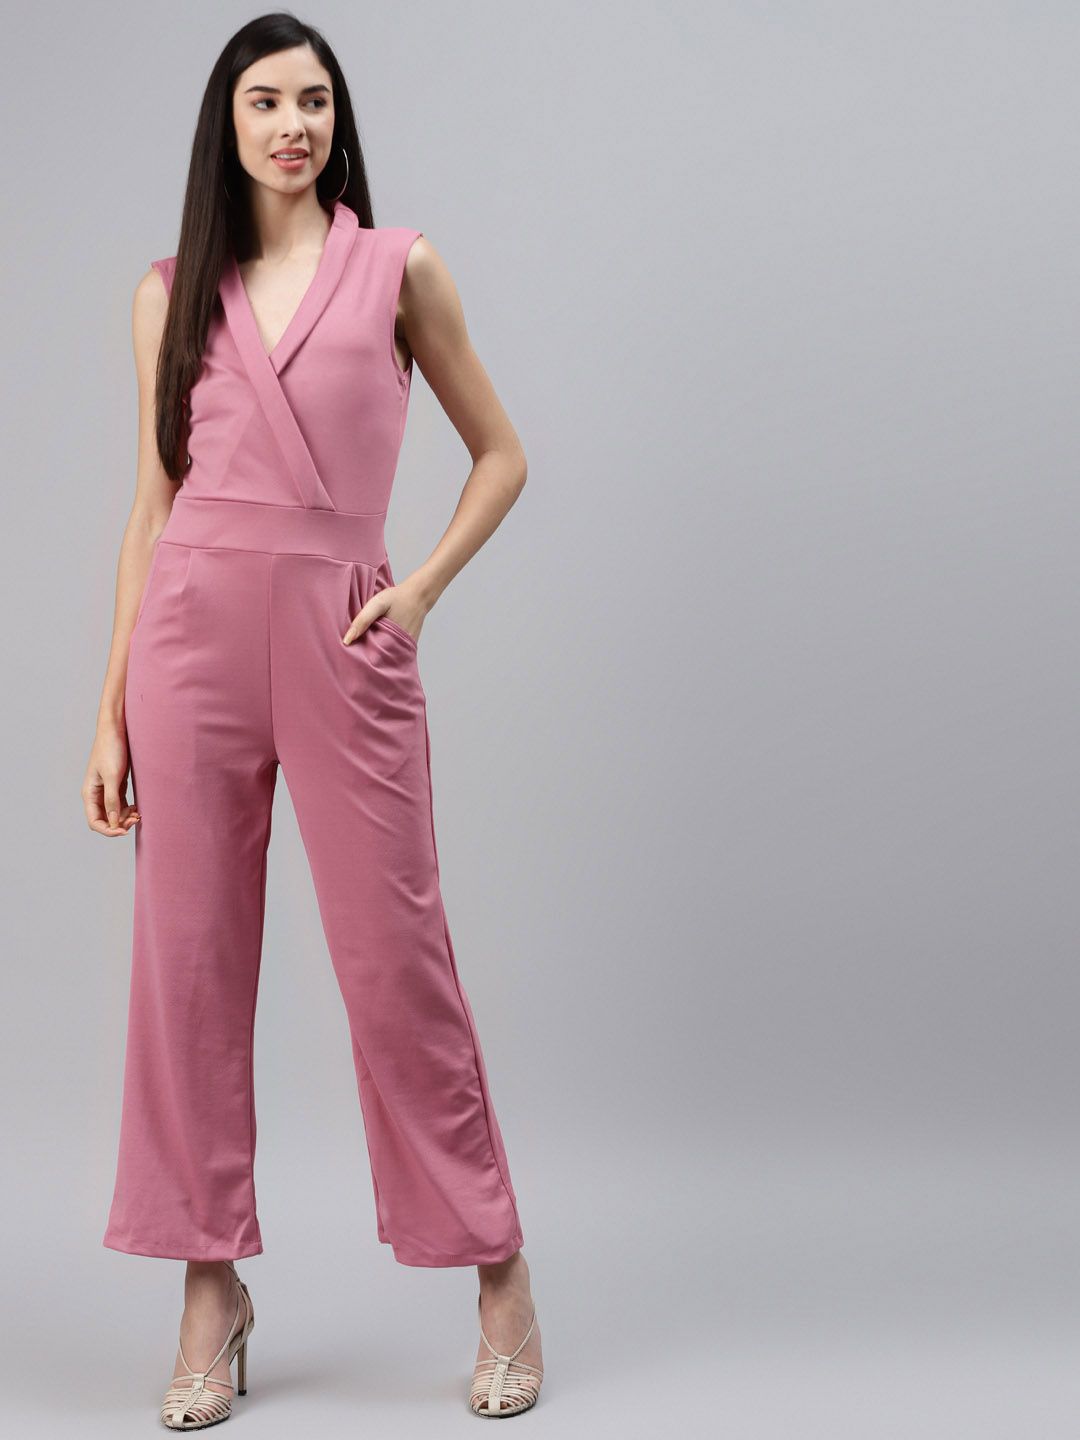 Sasimo Pink Sleeveless Basic Jumpsuit Price in India